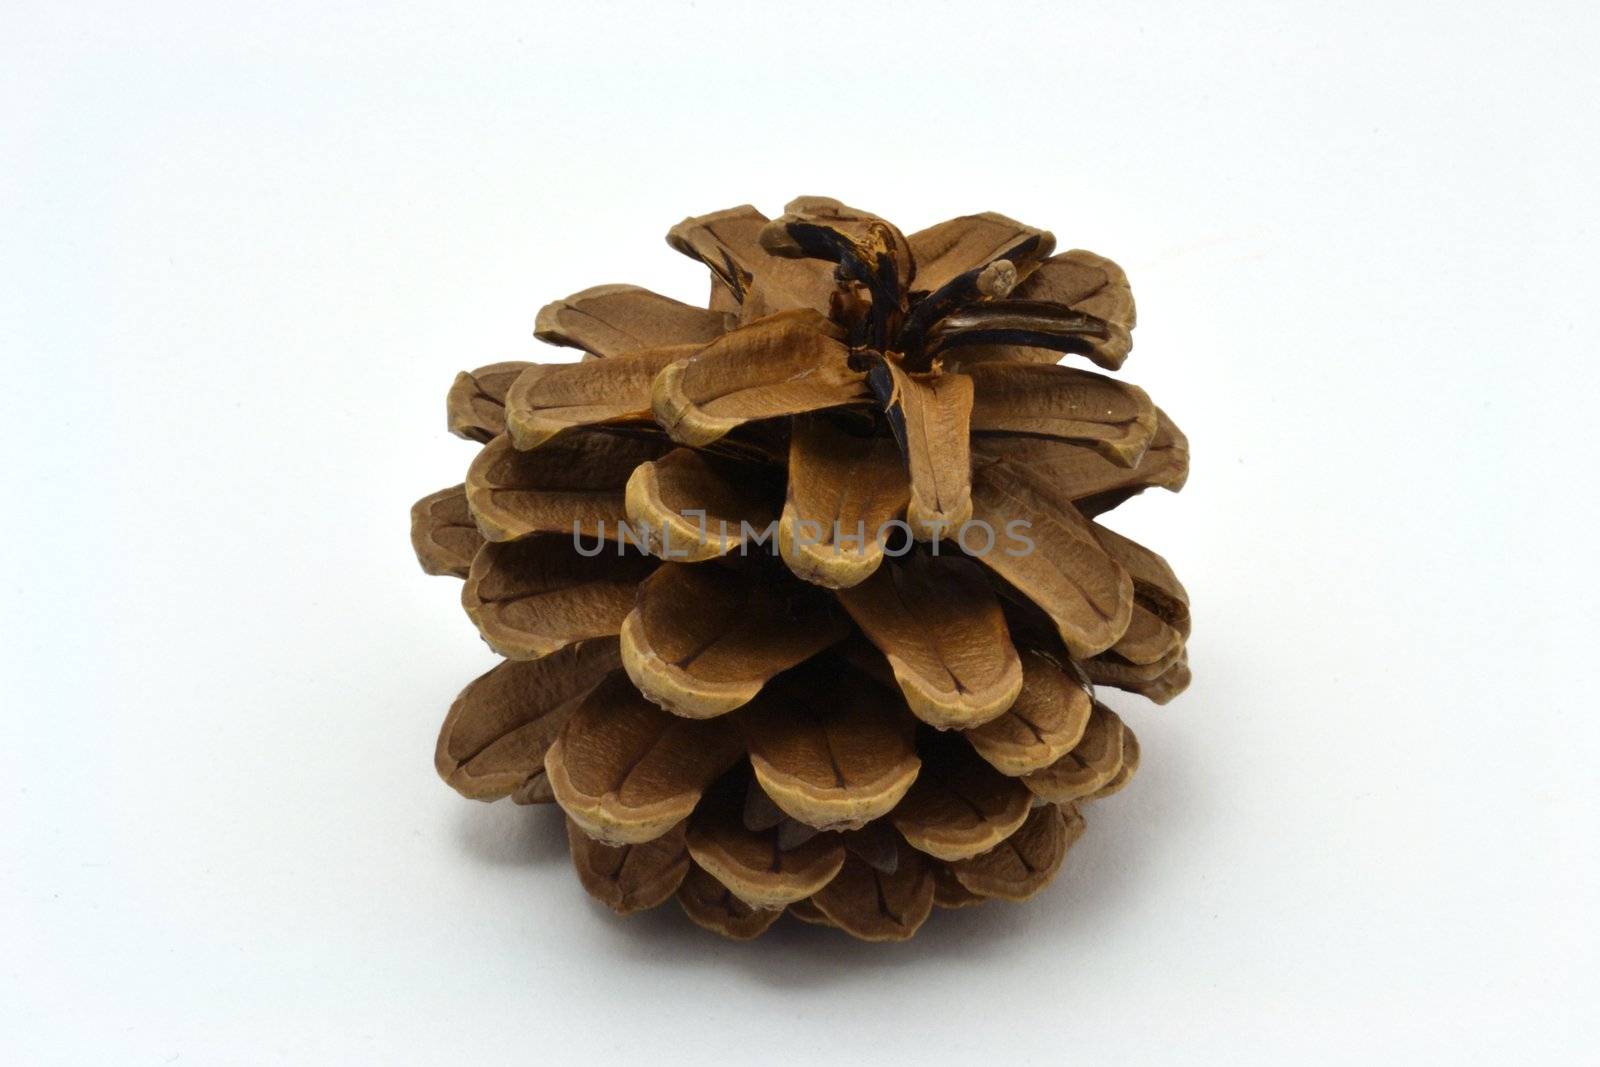 The Crimean pine cone by Autre